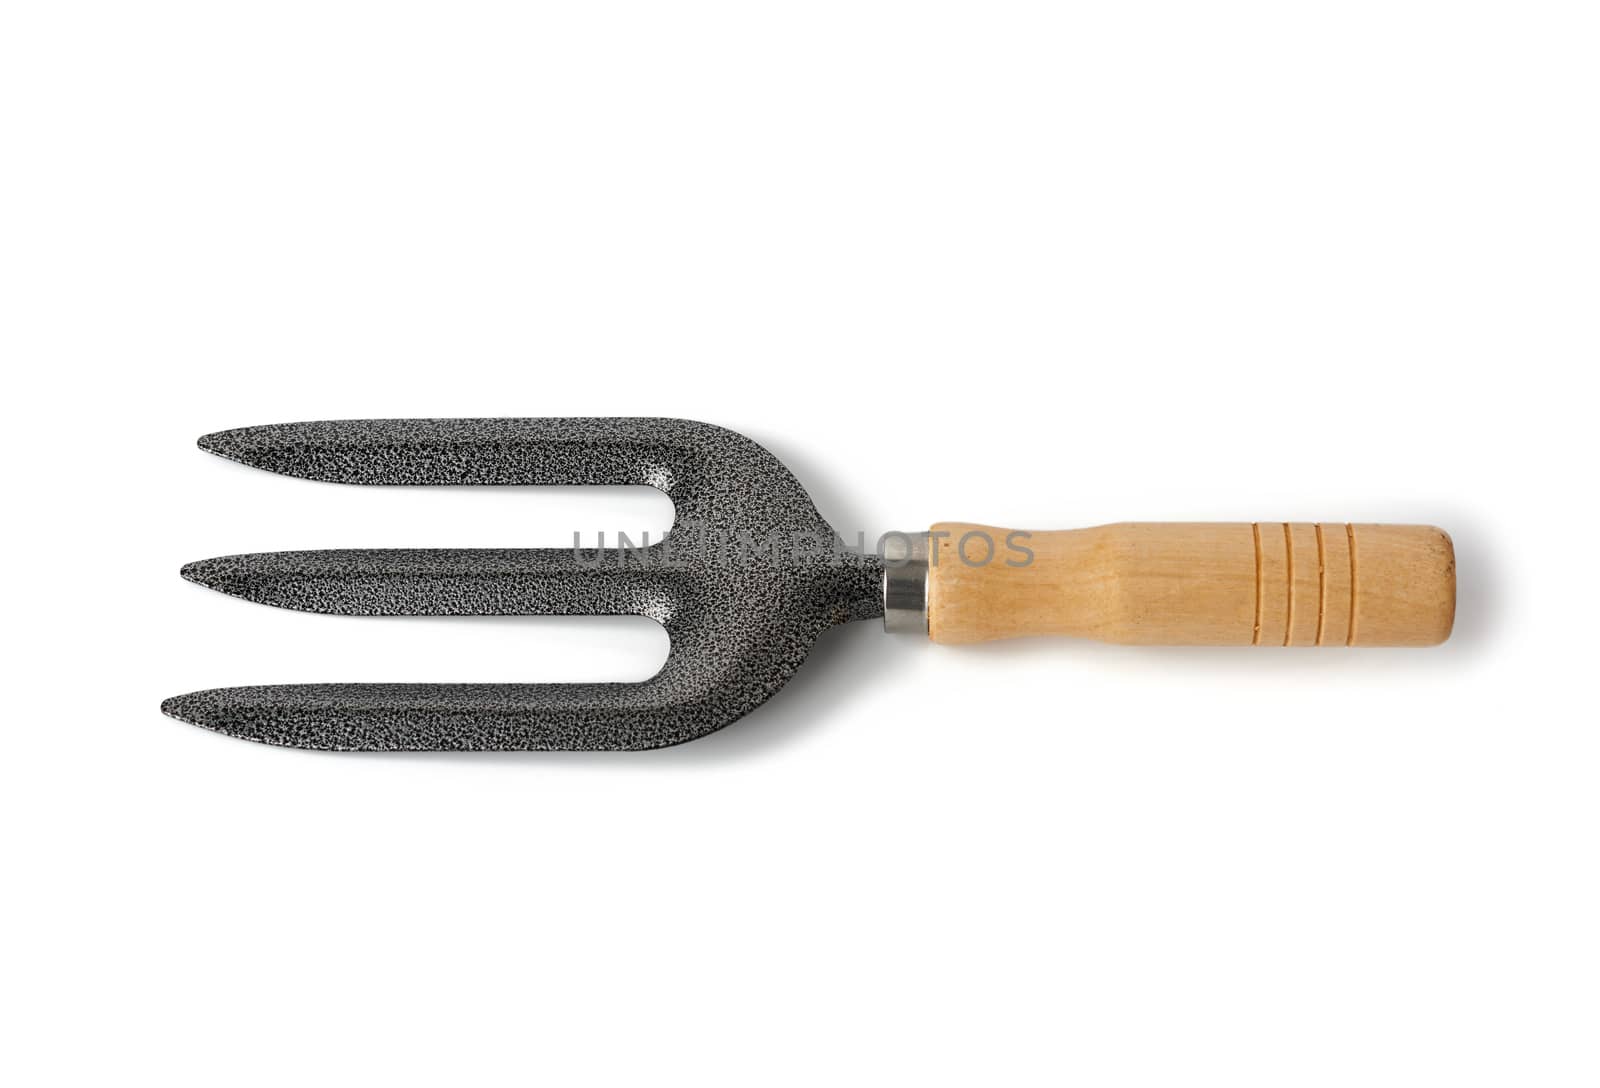 new metal little garden pitchfork on wooden handle  by ndanko